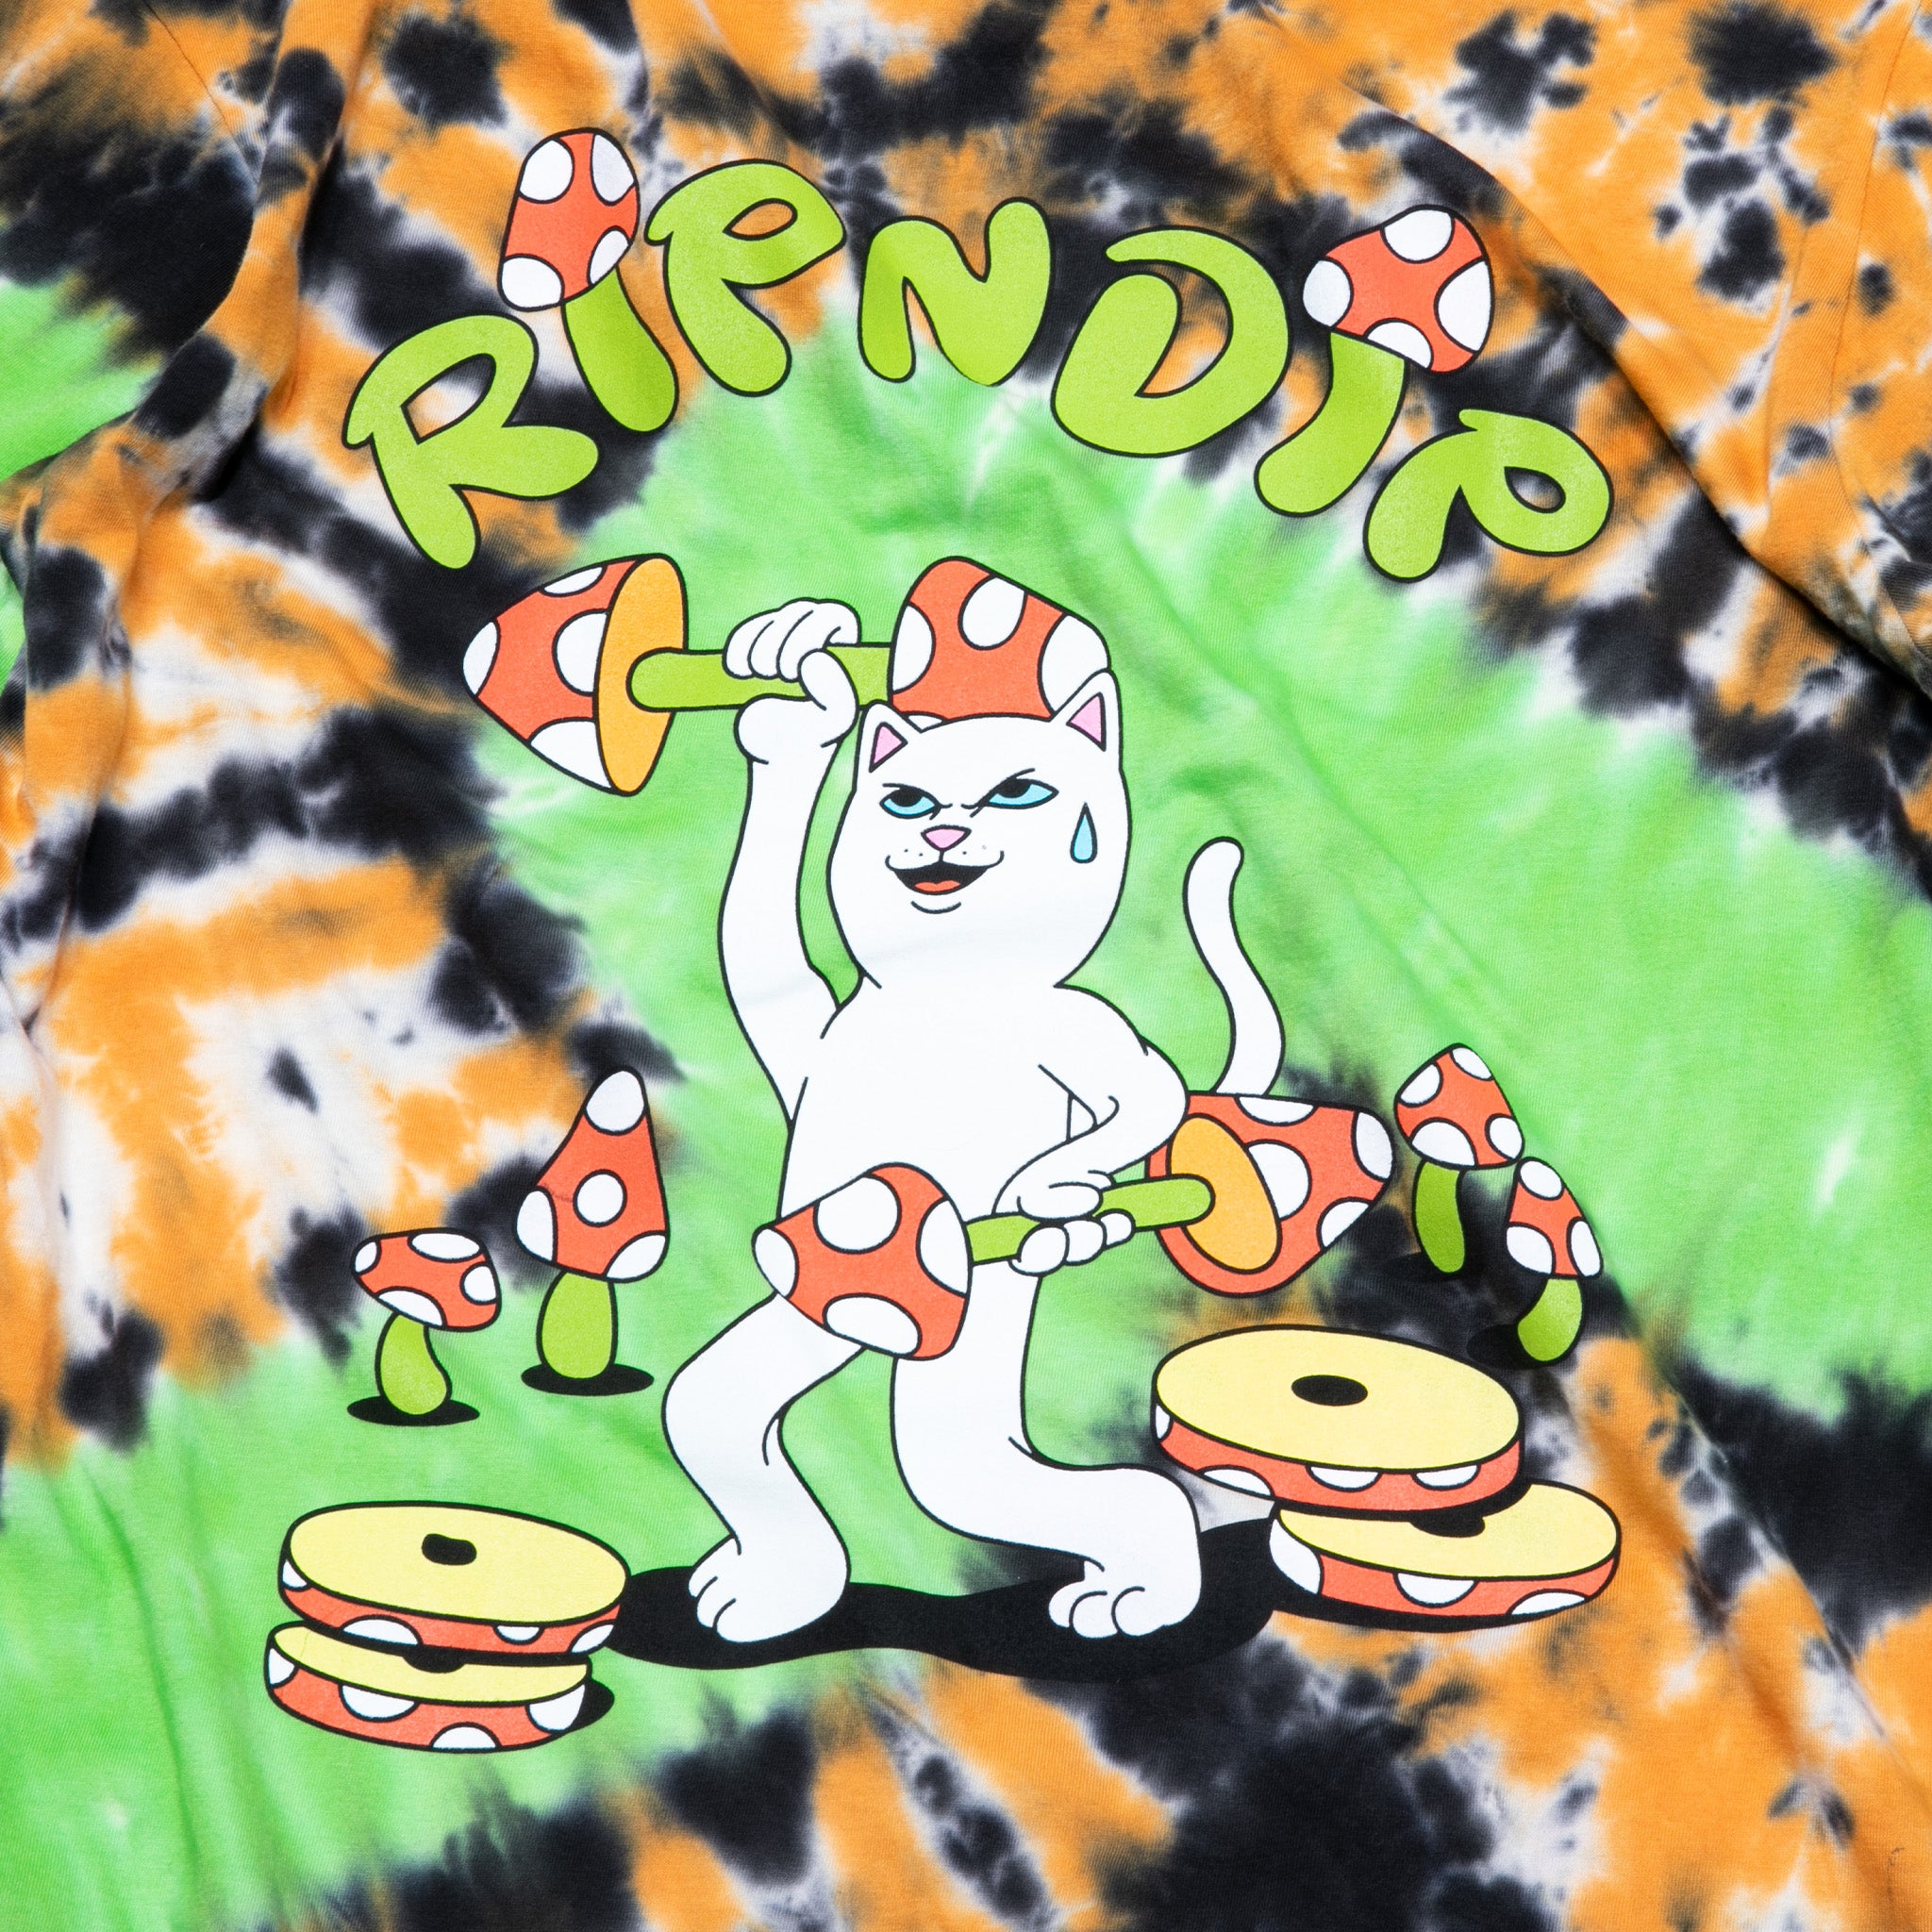 RipNDip Do You Even Lift Tee (Neon/Black/Orange Loop Dye)